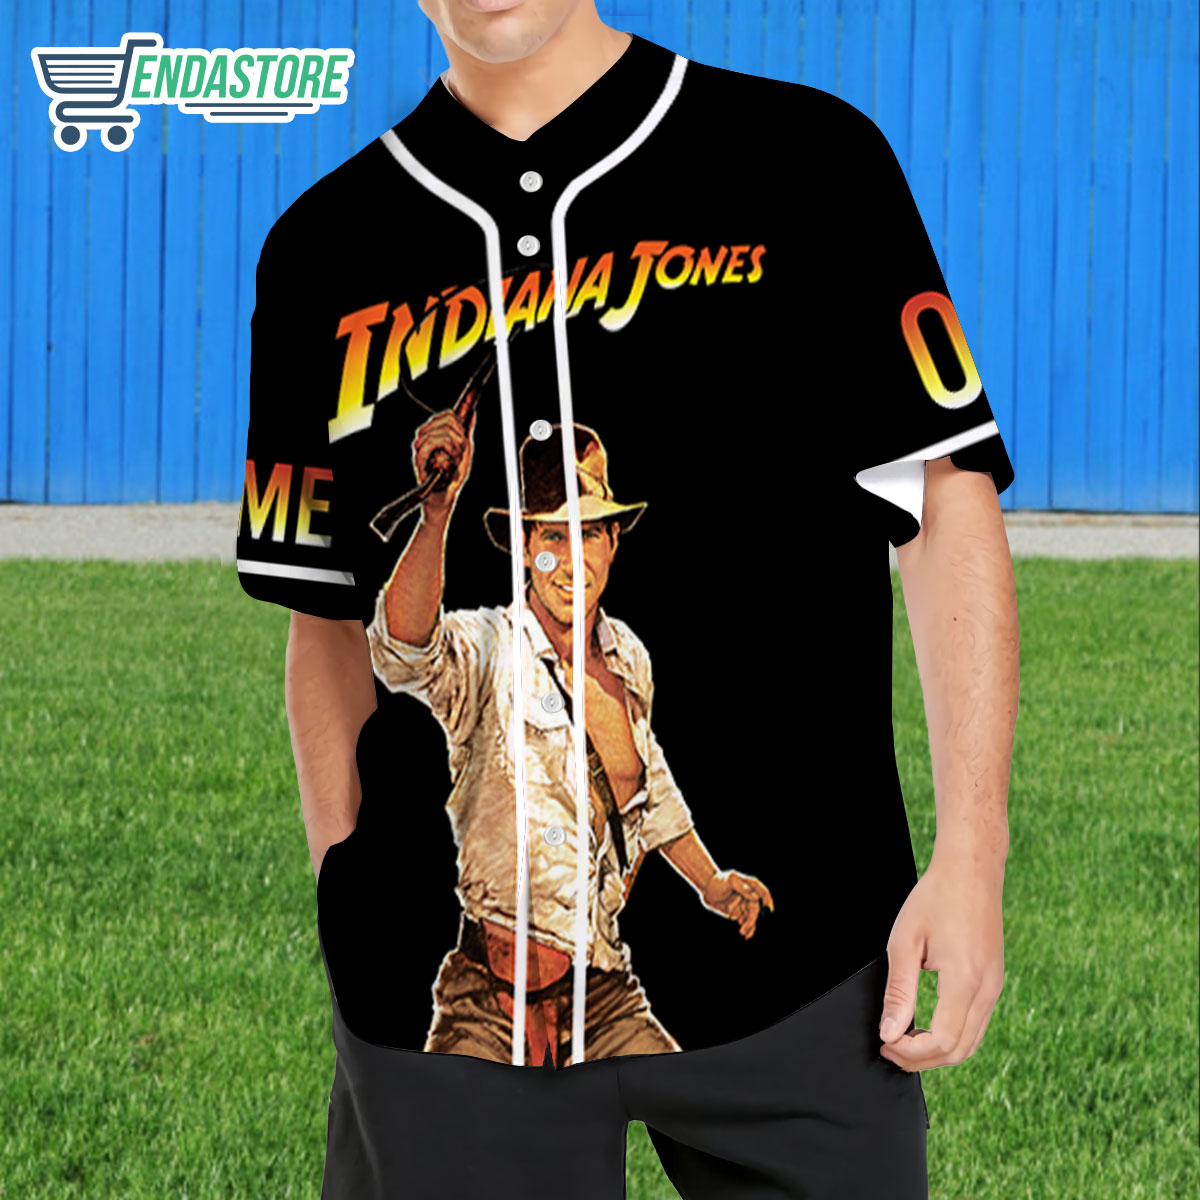 Indiana Jones Jersey T-Shirt, Indiana Jones Baseball Jersey T-Shirt